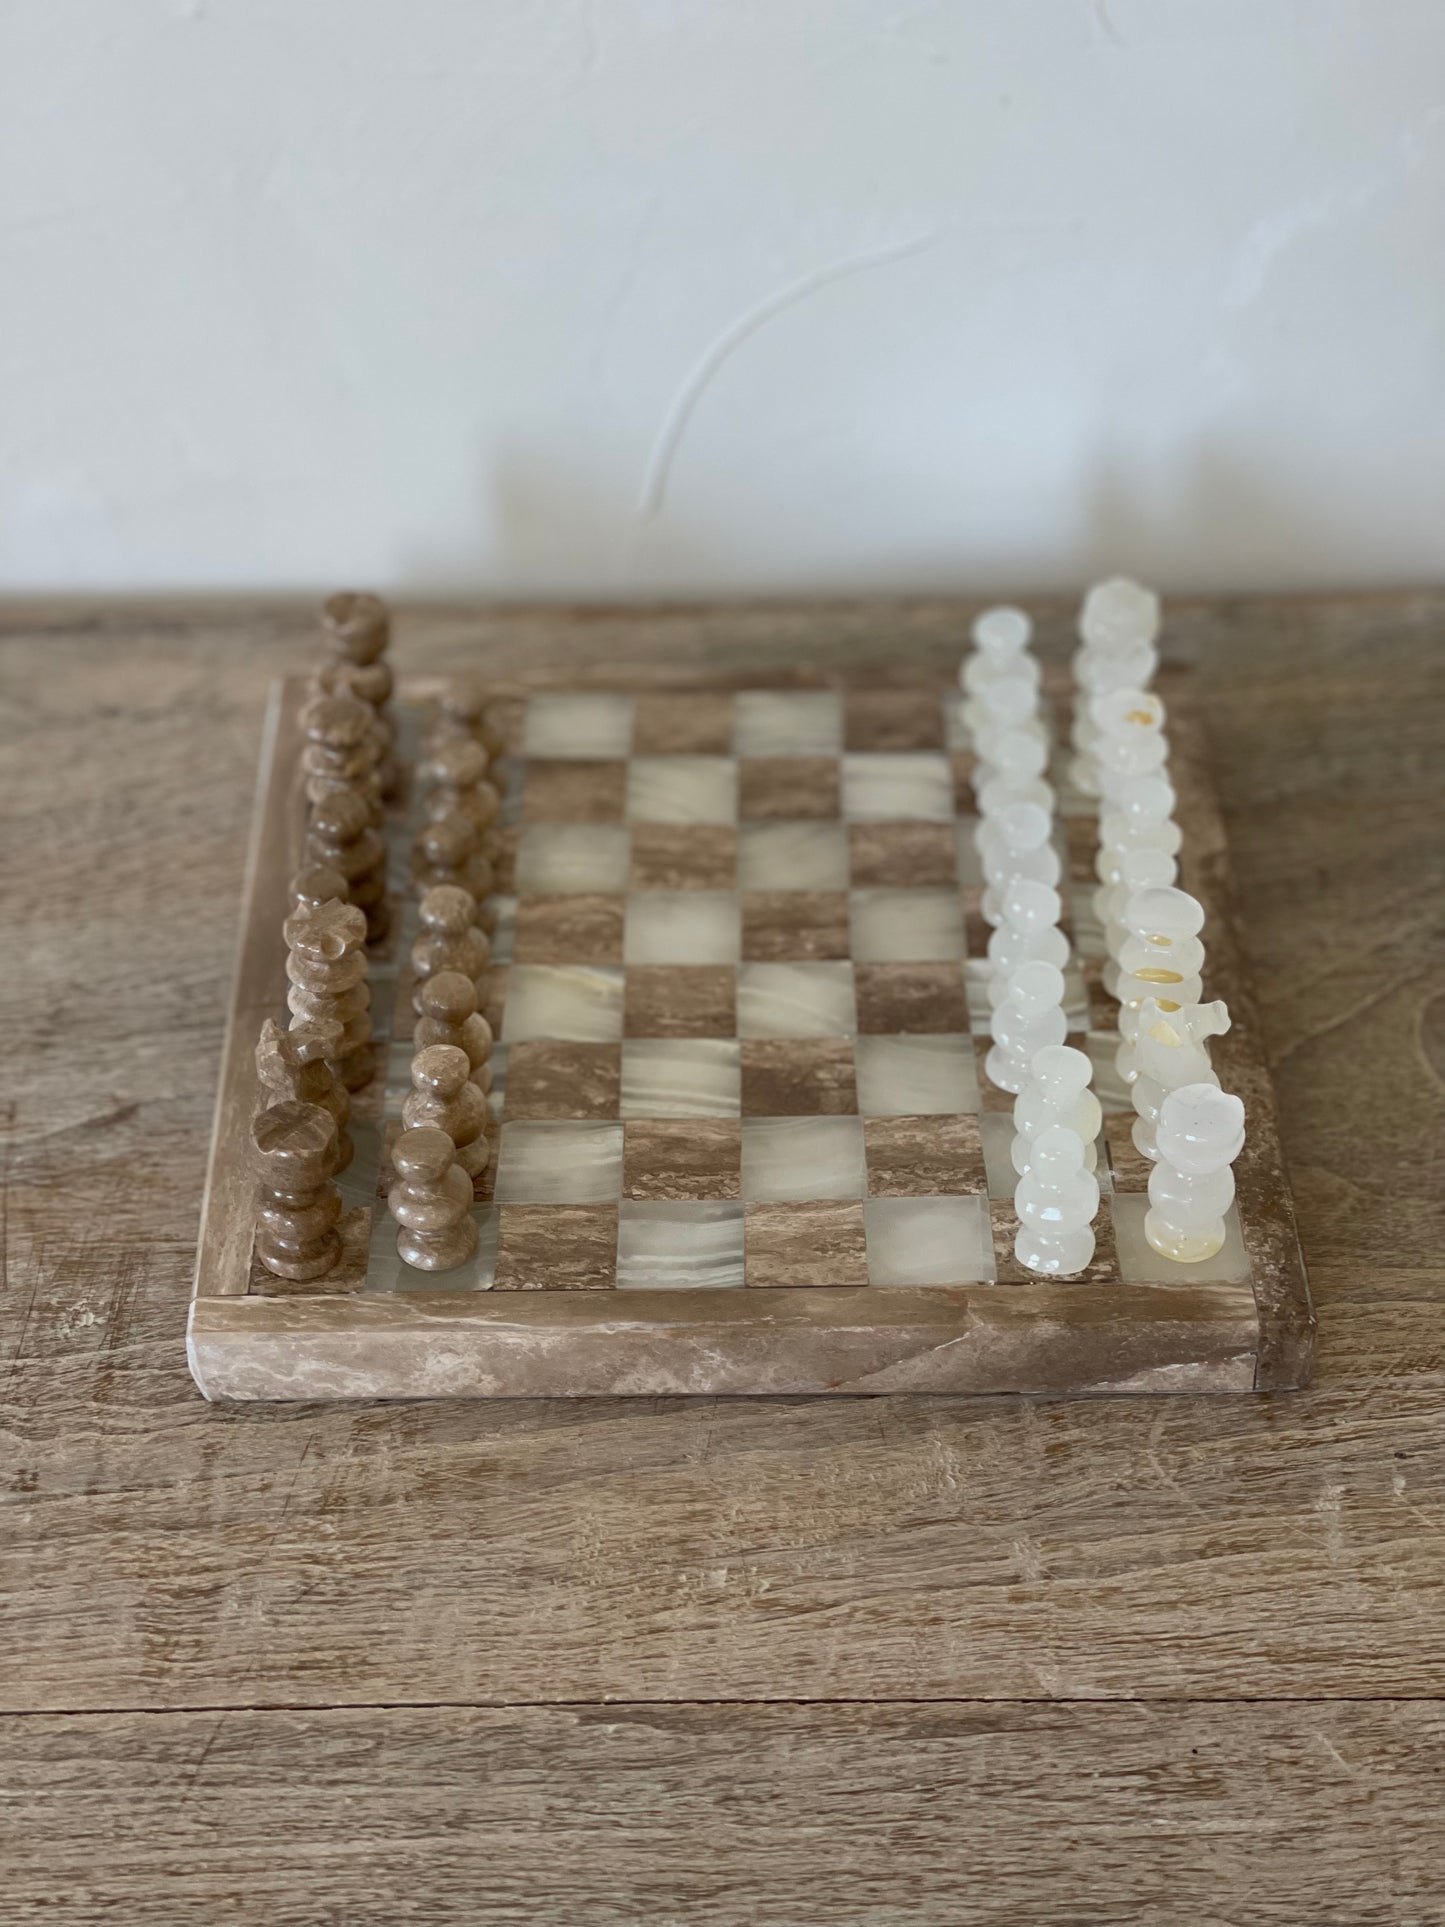 Tan/Beige Stone Chess Board